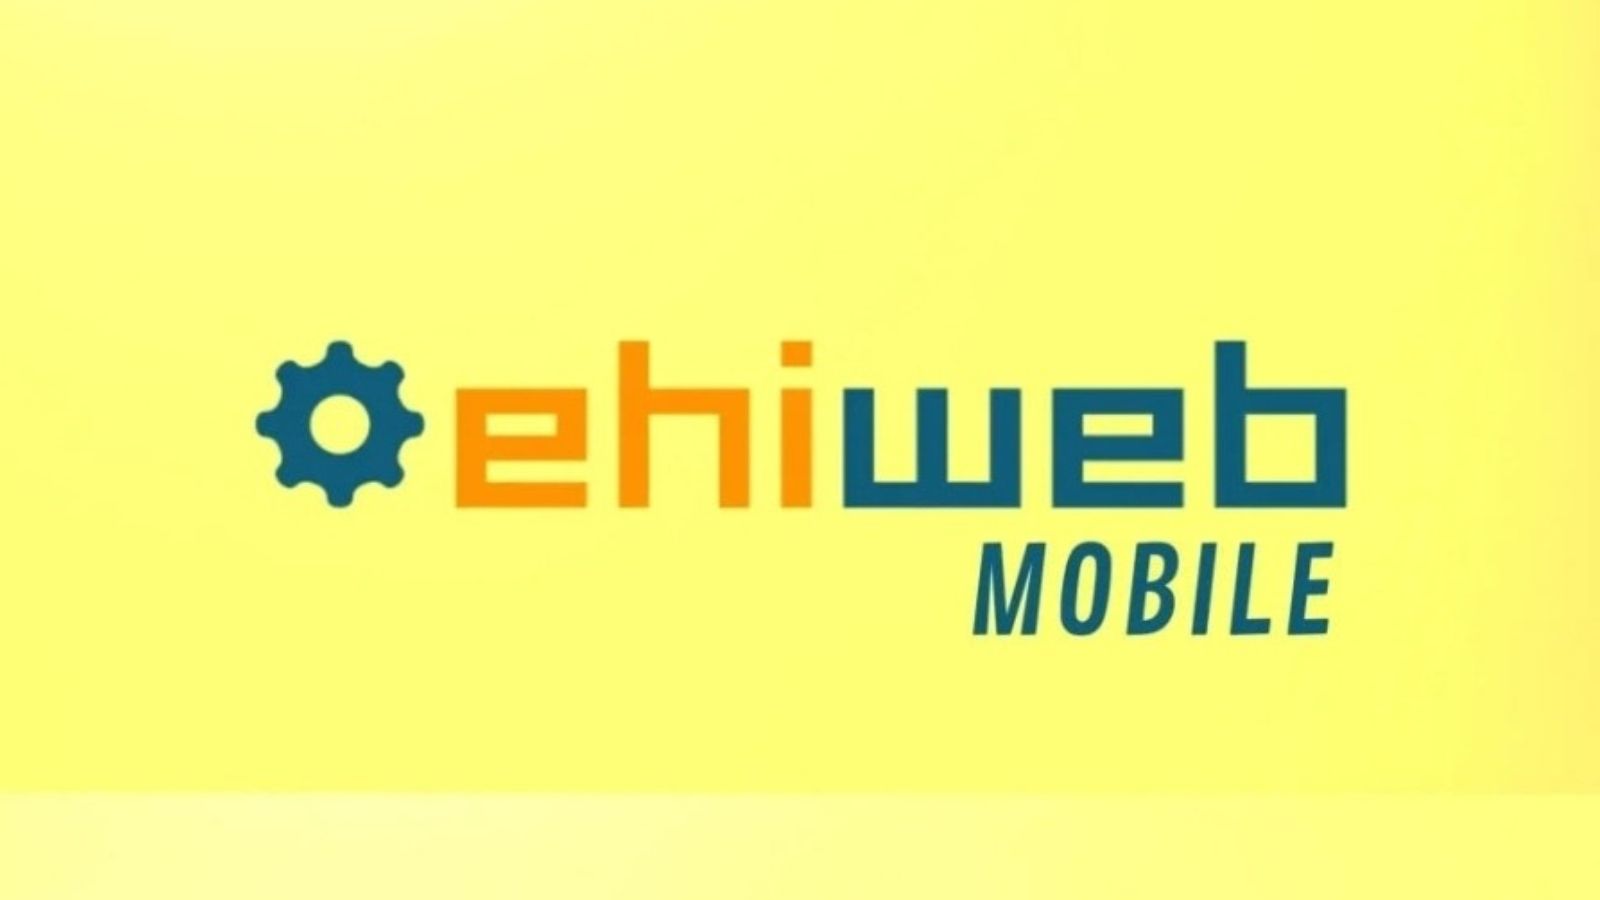 Ehiweb Mobile nuova offerta 